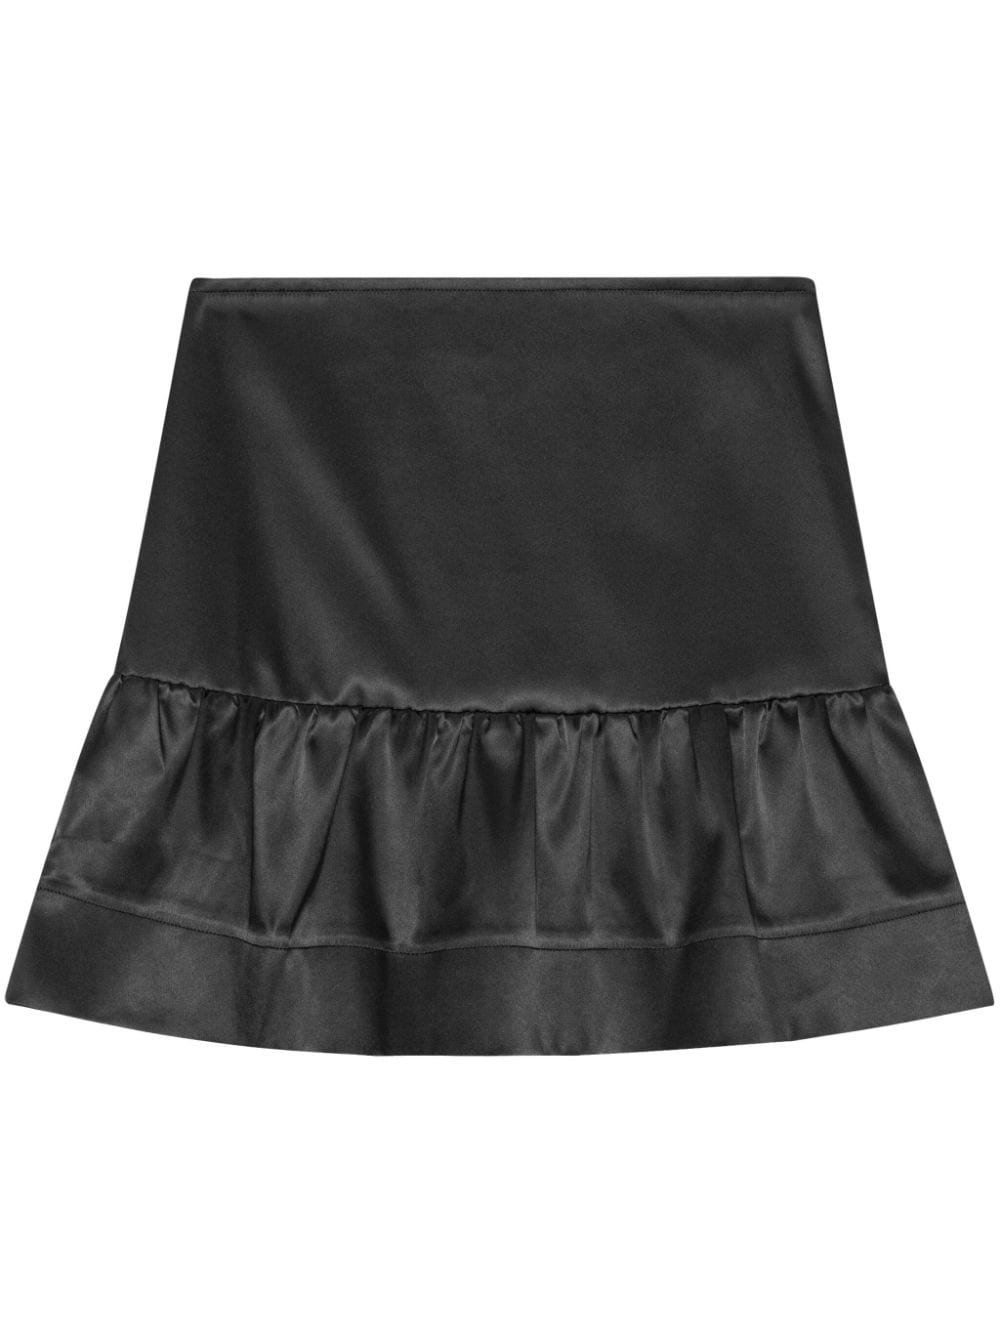 Image 1 of GANNI satin-finish ruffled miniskirt